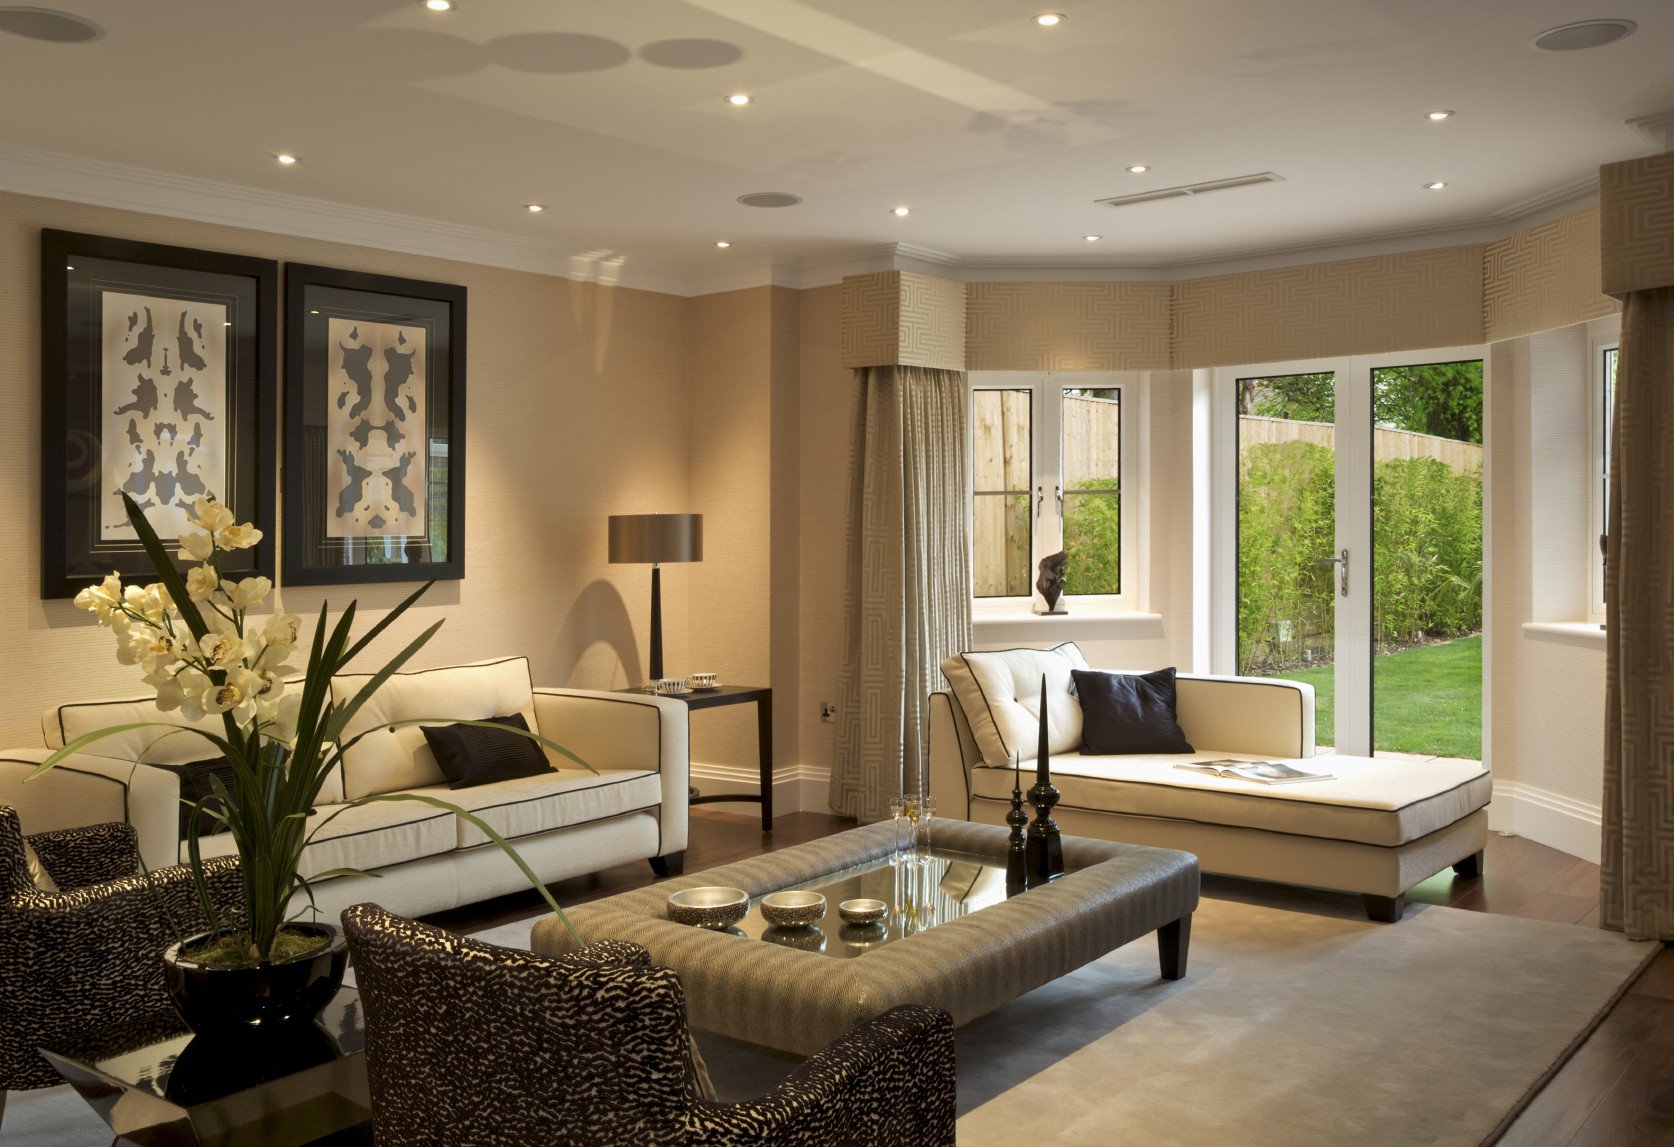 Comfortable Modern Living Room New Make the Living Room Design Be E More fortable Inspirationseek